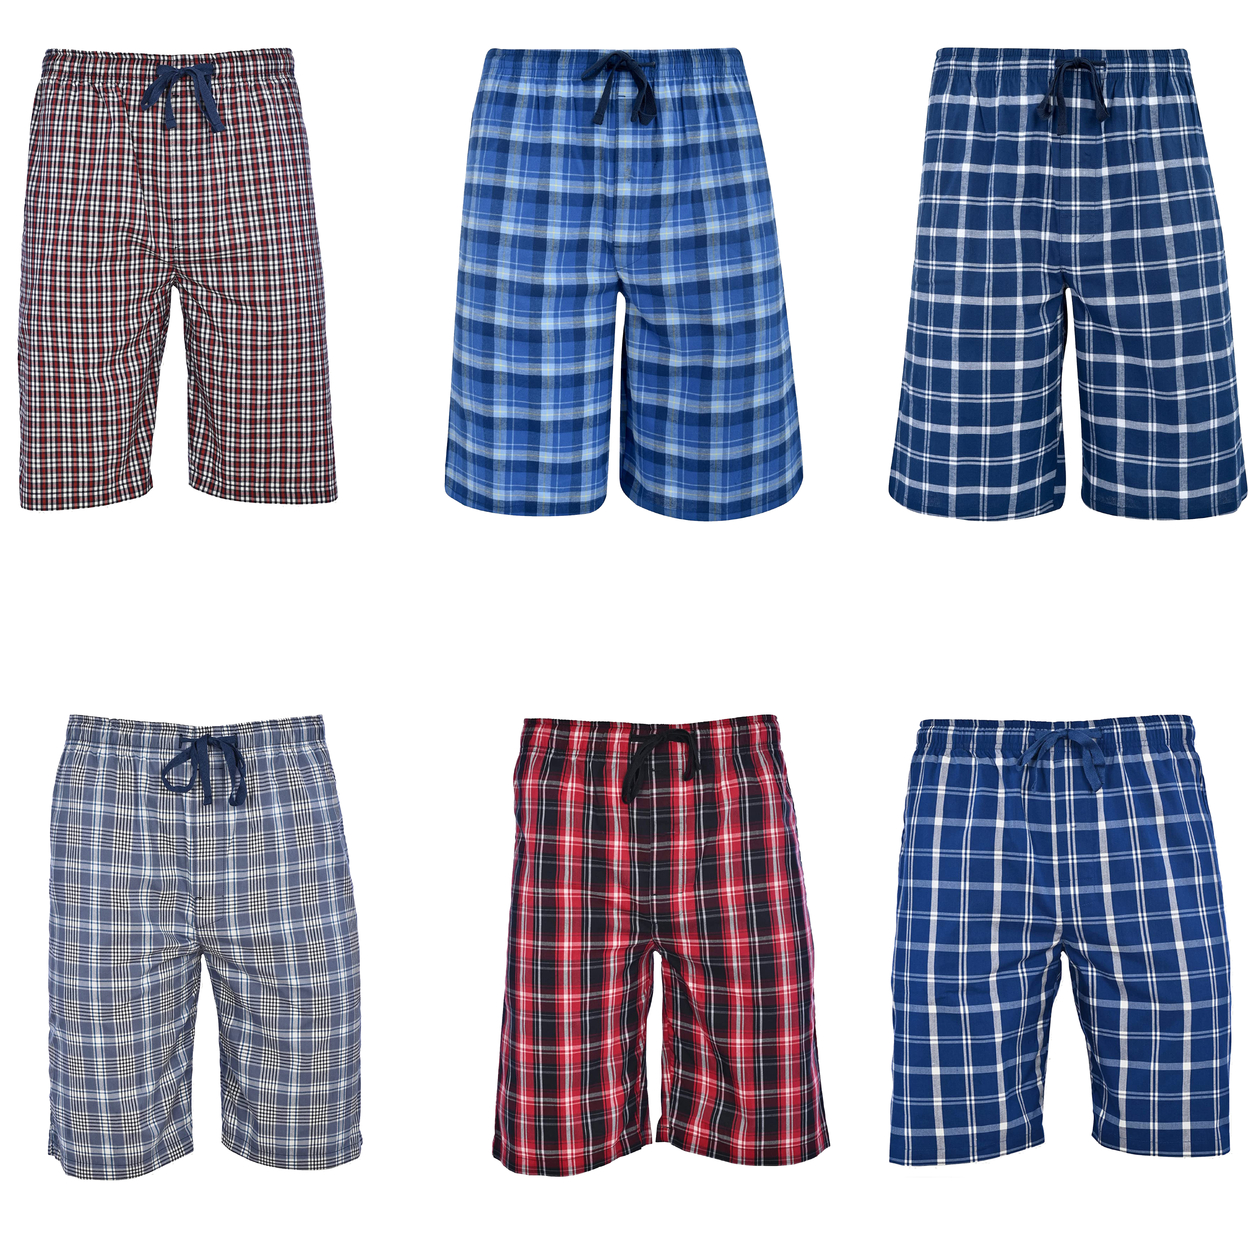 2-Pack: Men's Ultra Soft Plaid Lounge Pajama Sleep Wear Shorts - Red & Tan, X-large